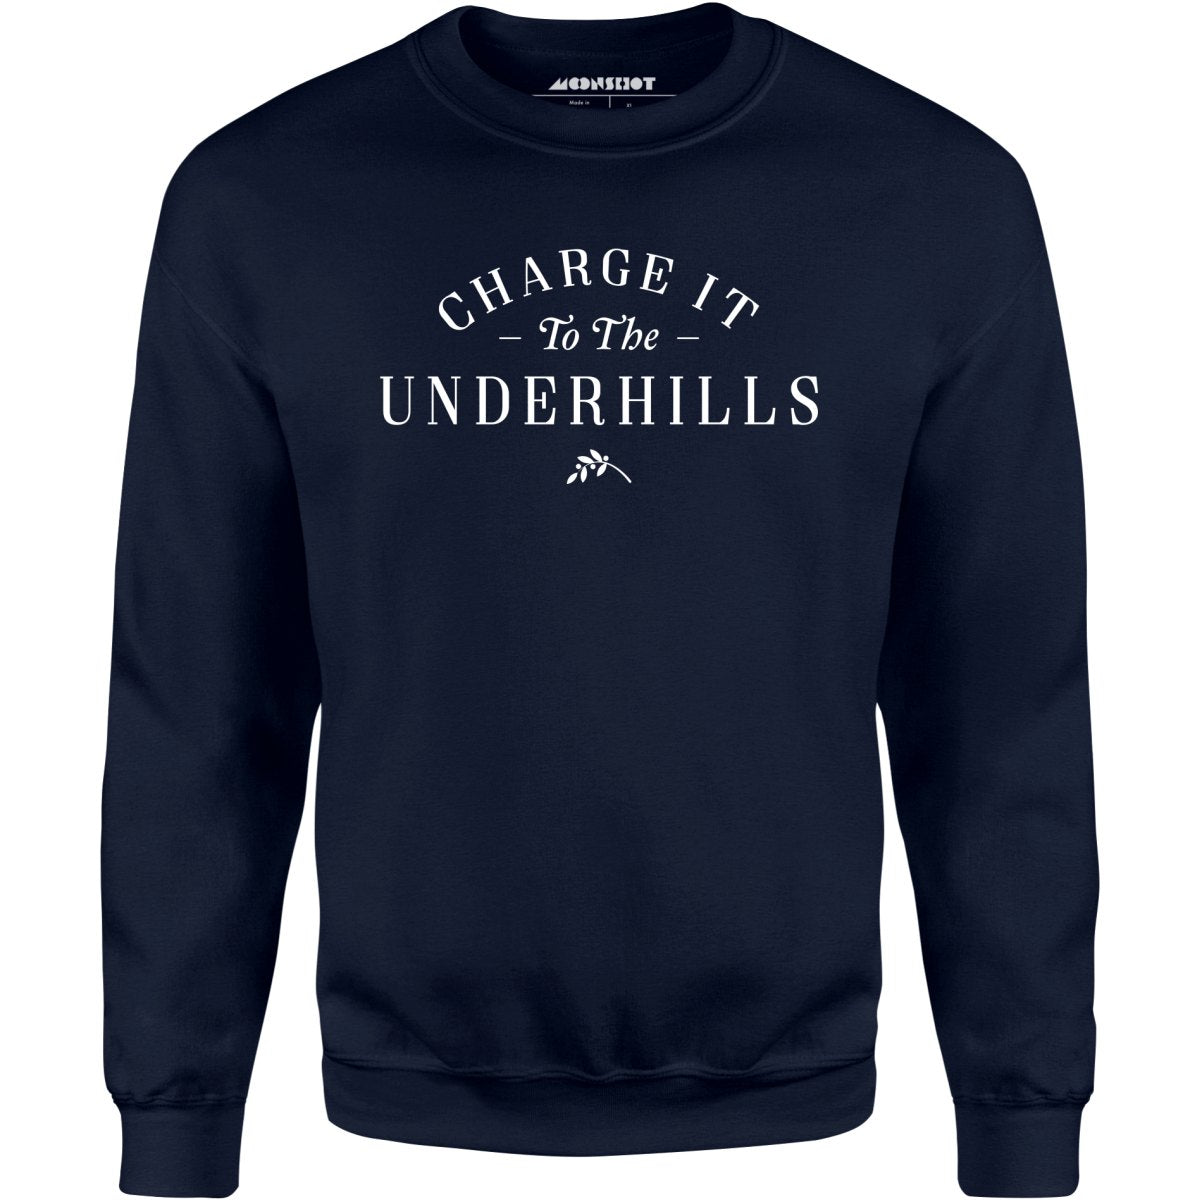 Charge it to the Underhills - Unisex Sweatshirt